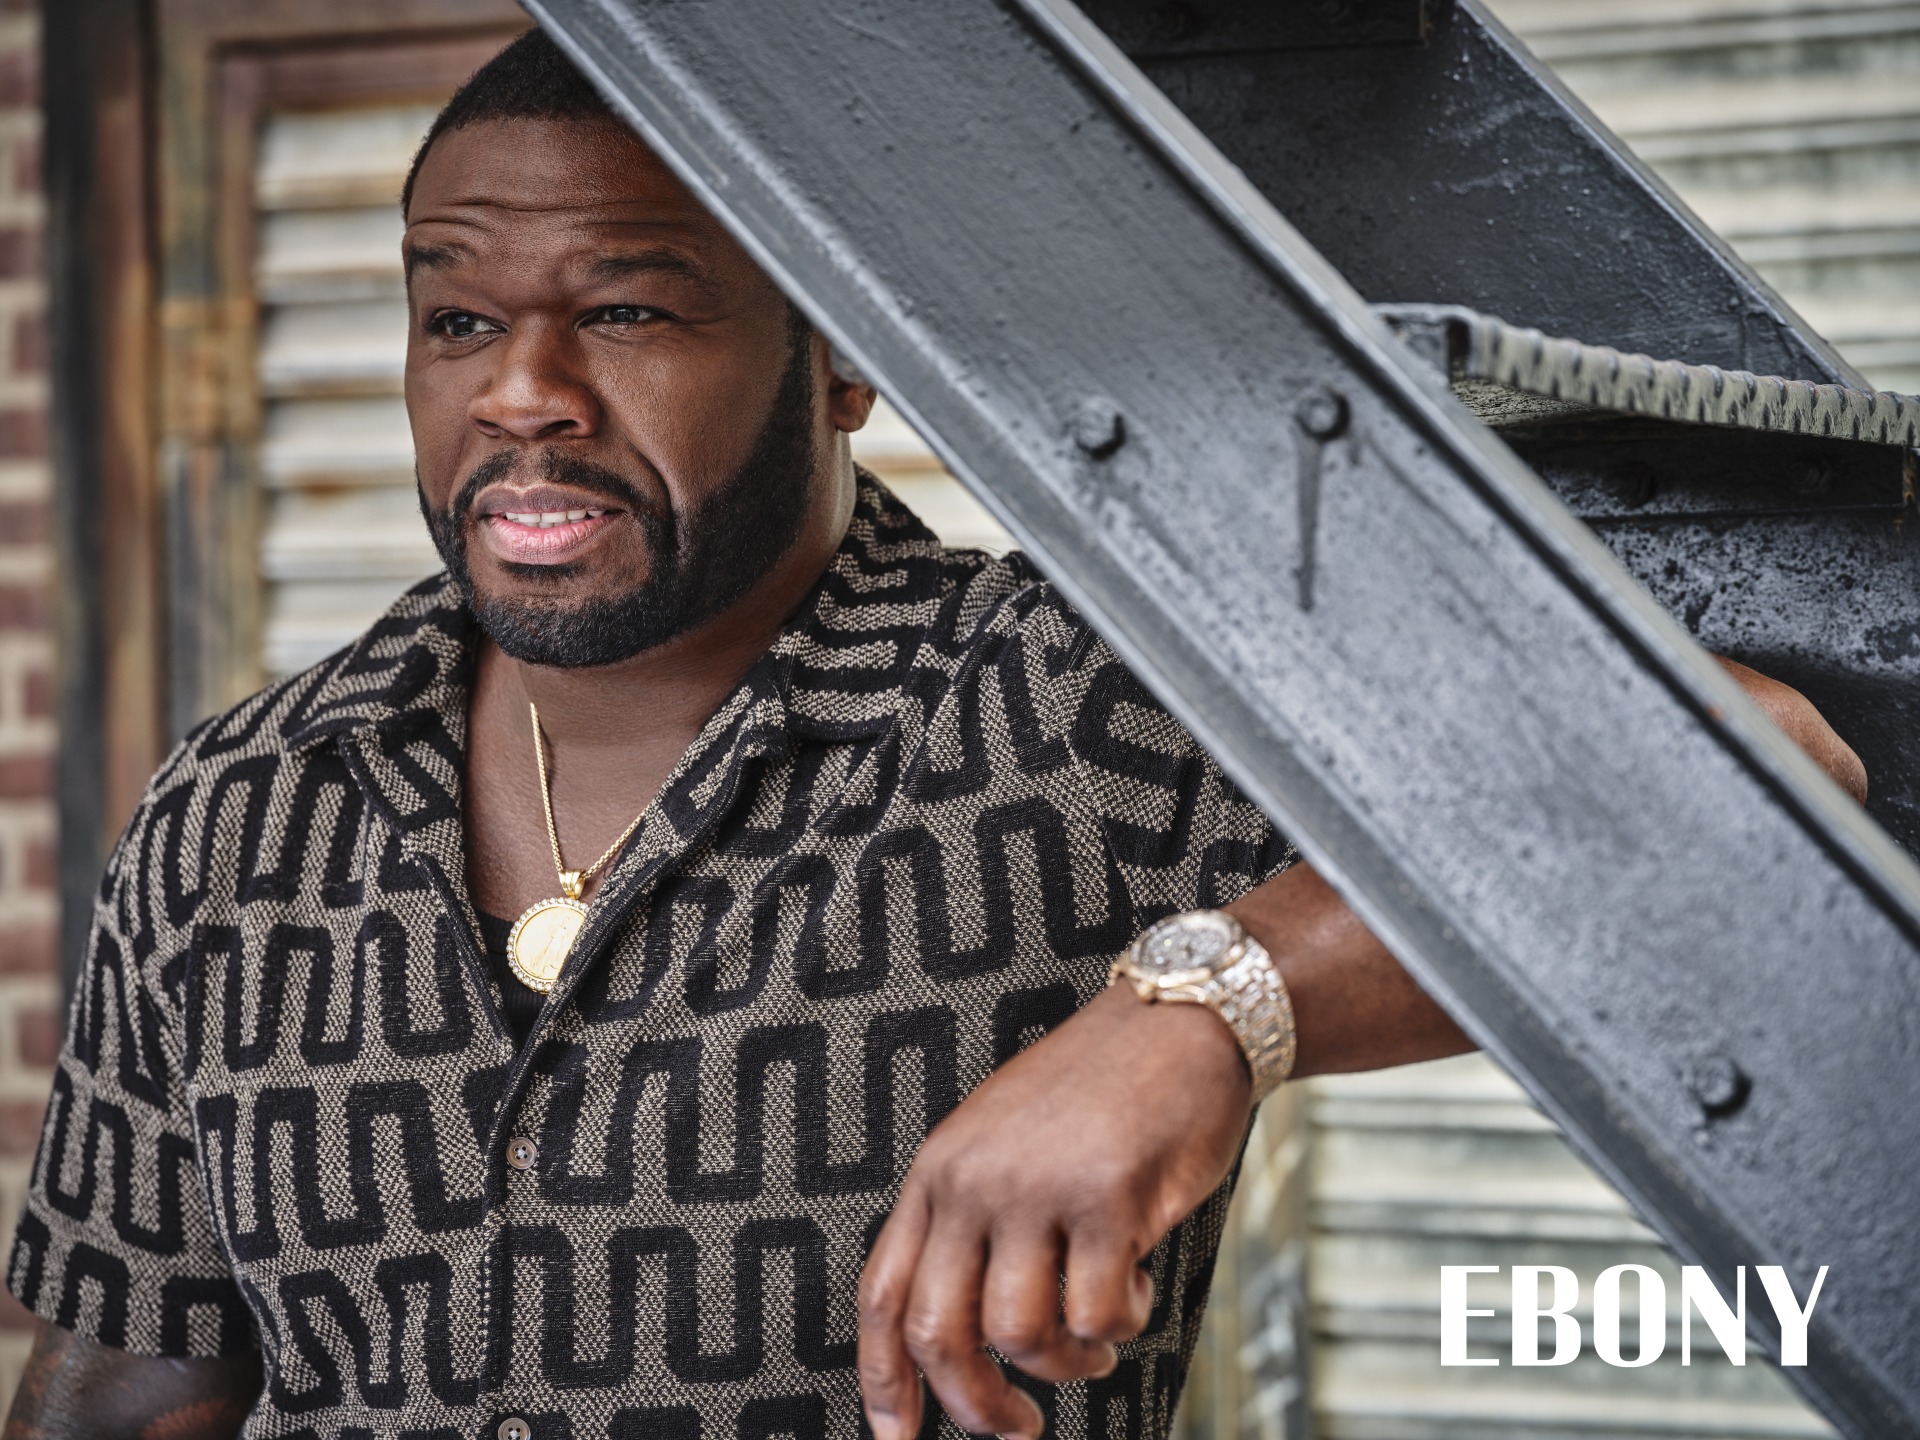 50 Cent says his next album will be his last